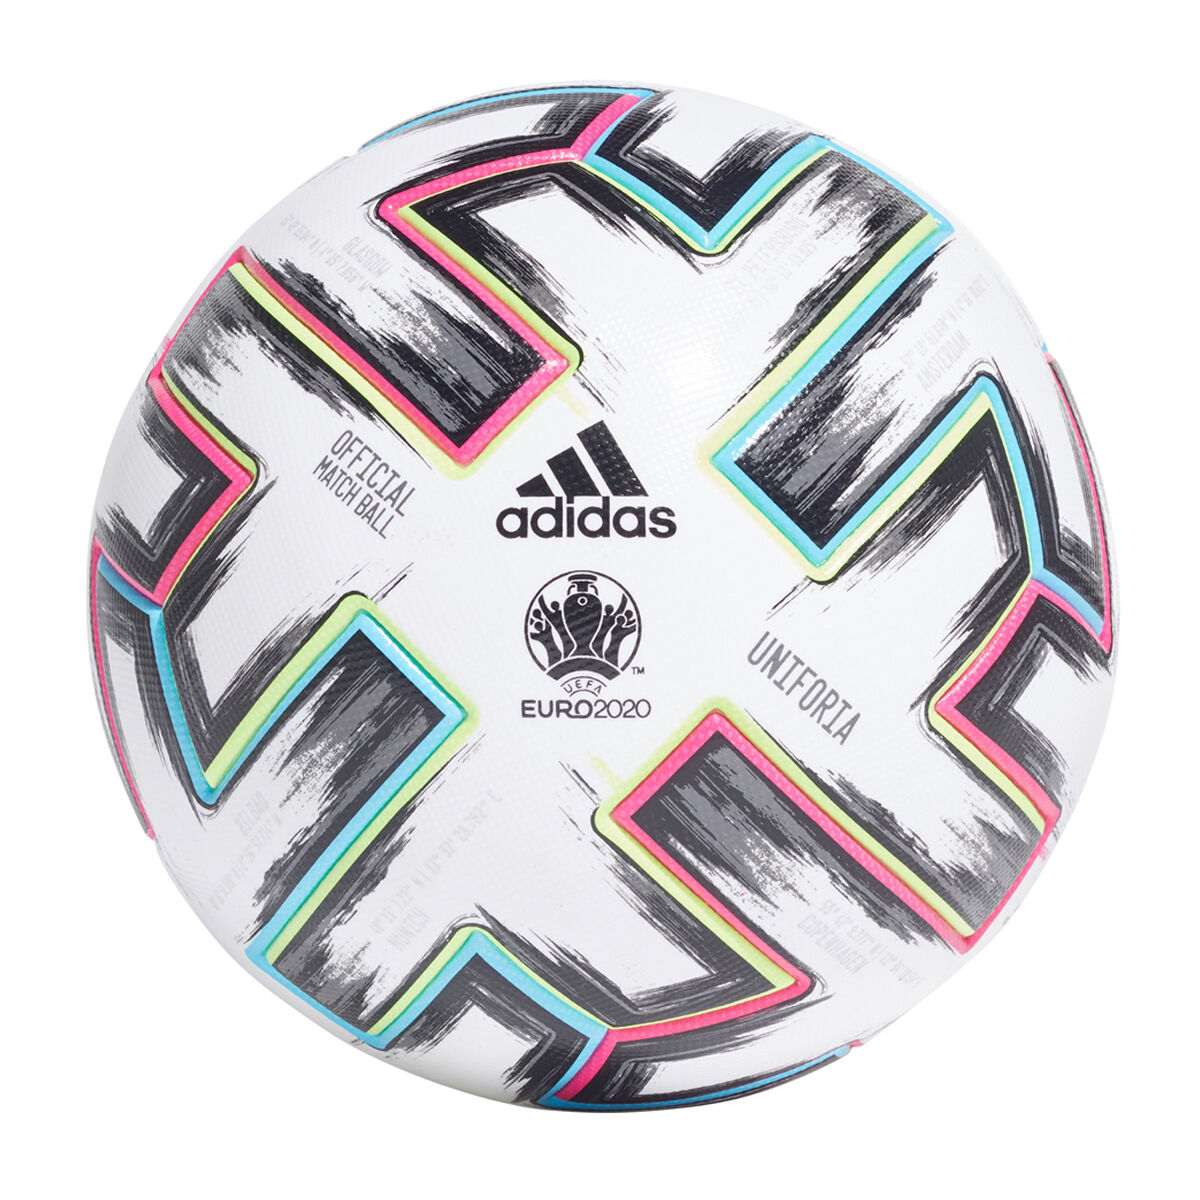 adidas soccer ball price